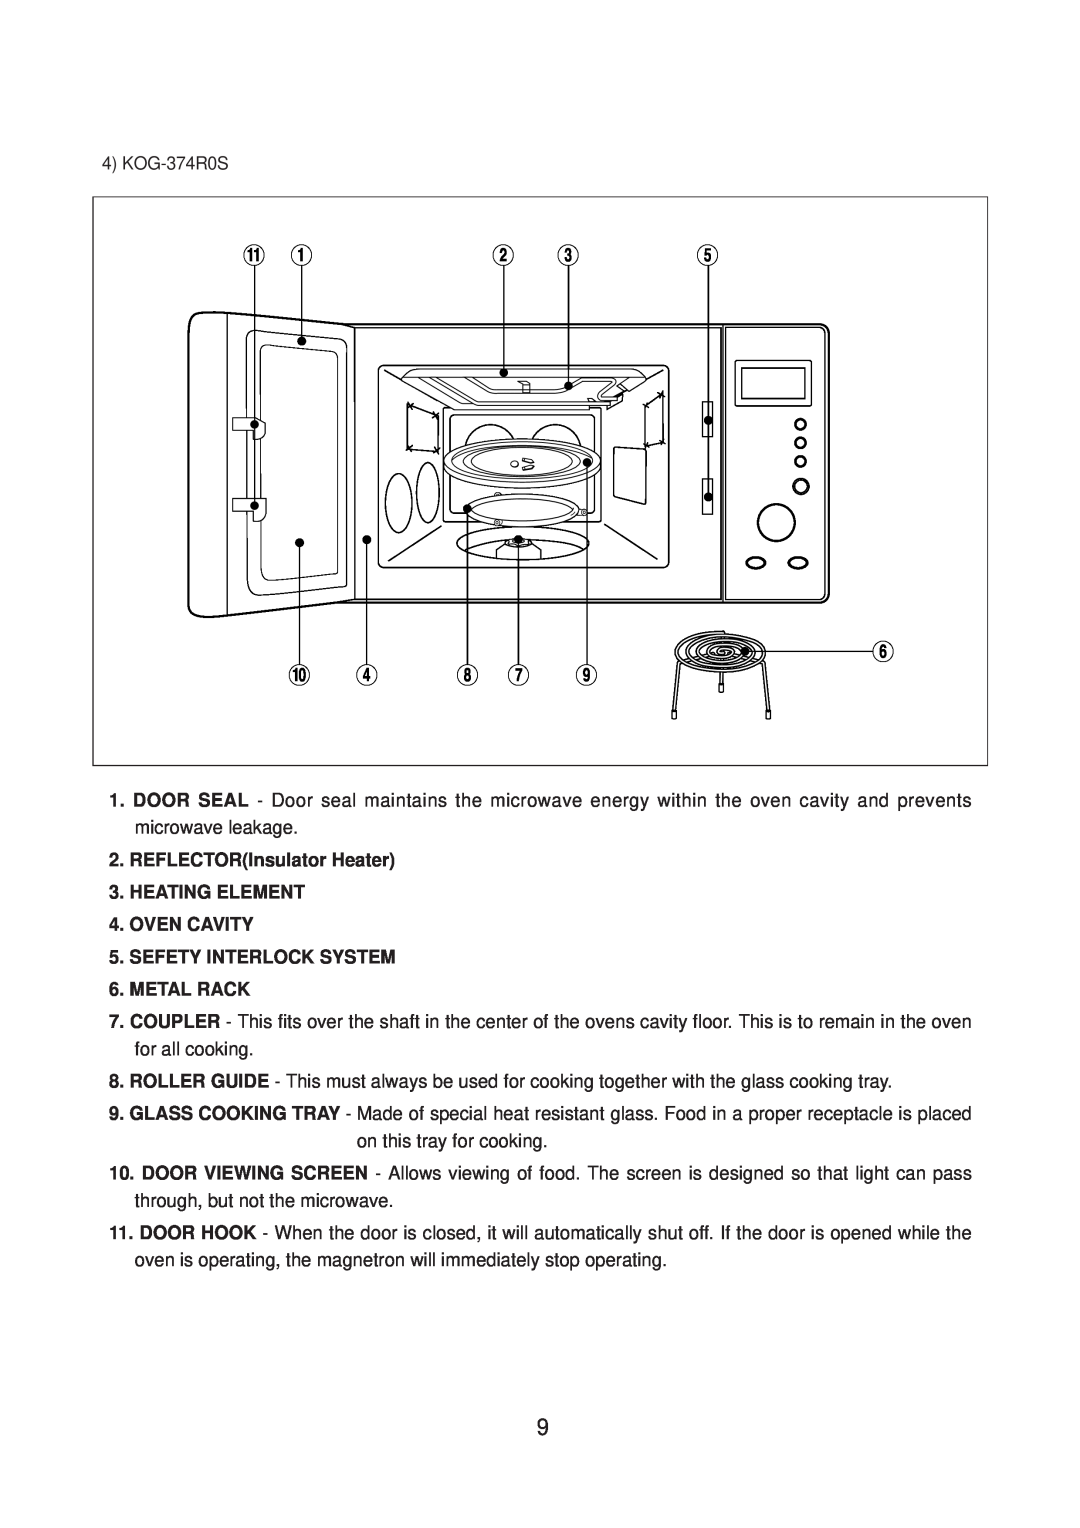 Daewoo KOG-373R0S SEFETY INTERLOCK SYSTEM 6. METAL RACK, REFLECTORInsulator Heater 3. HEATING ELEMENT 4. OVEN CAVITY 